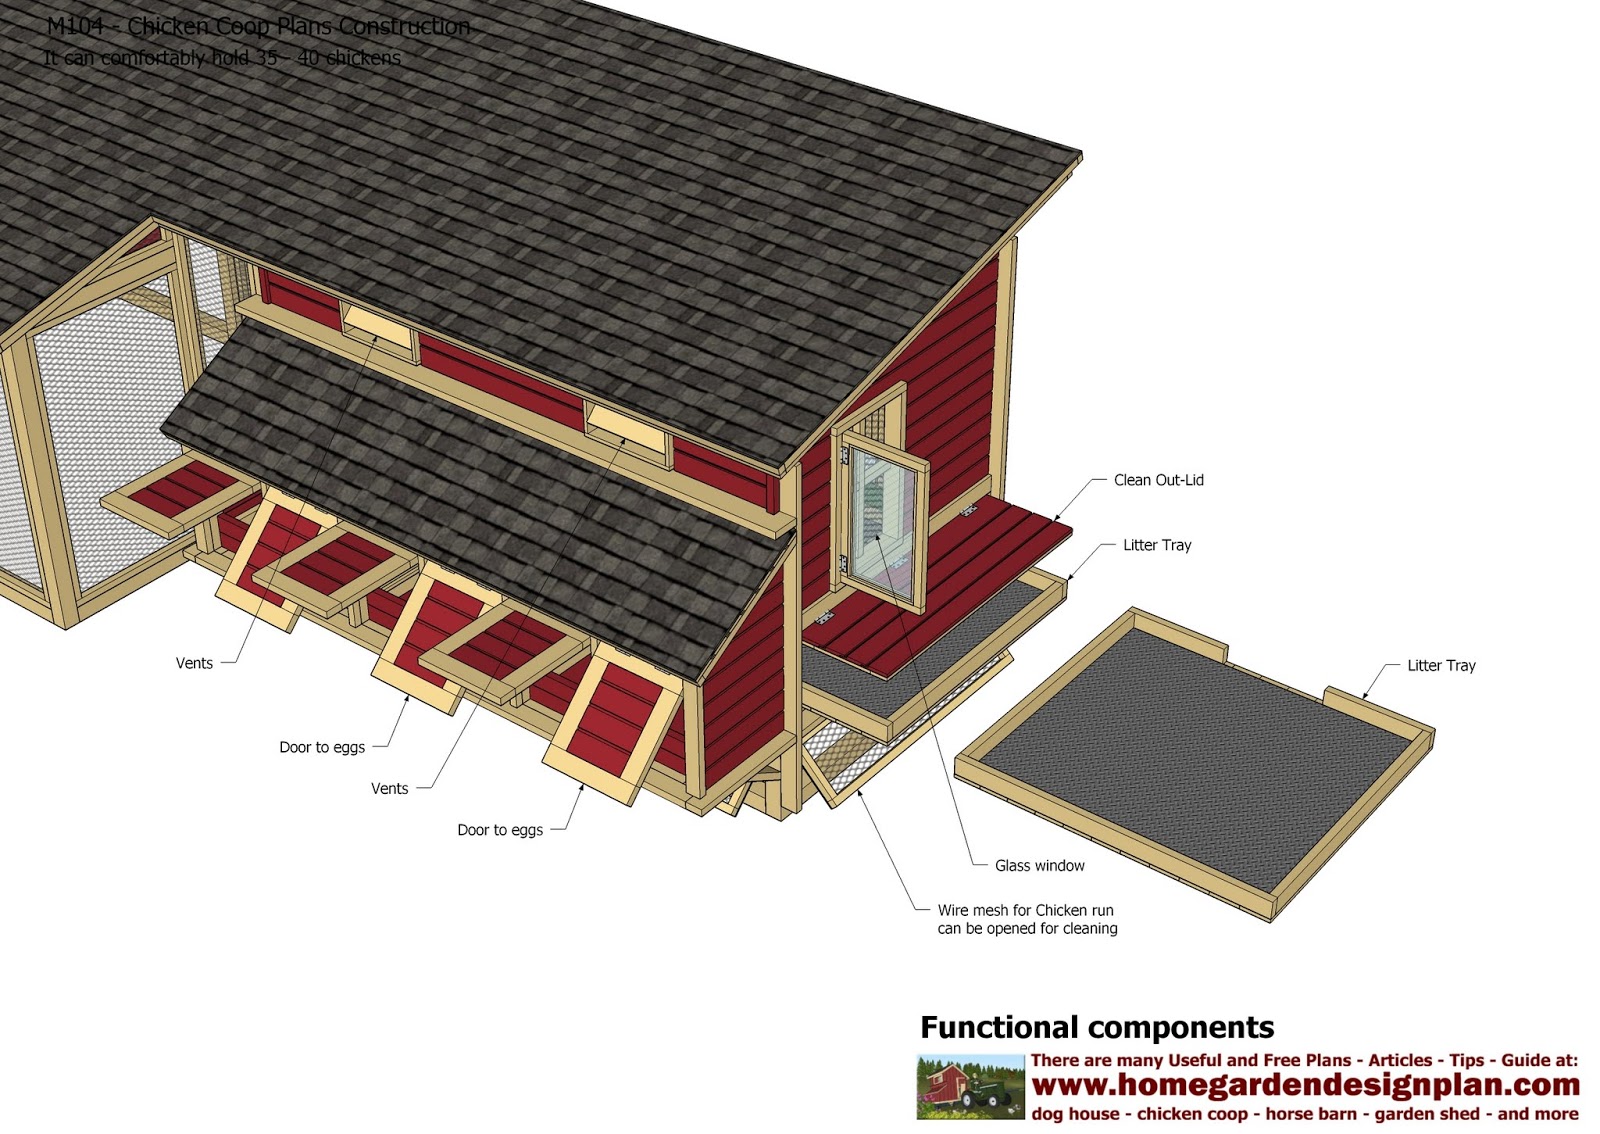 M104 - Chicken Coop Plans Construction - Chicken Coop Design - How To ...